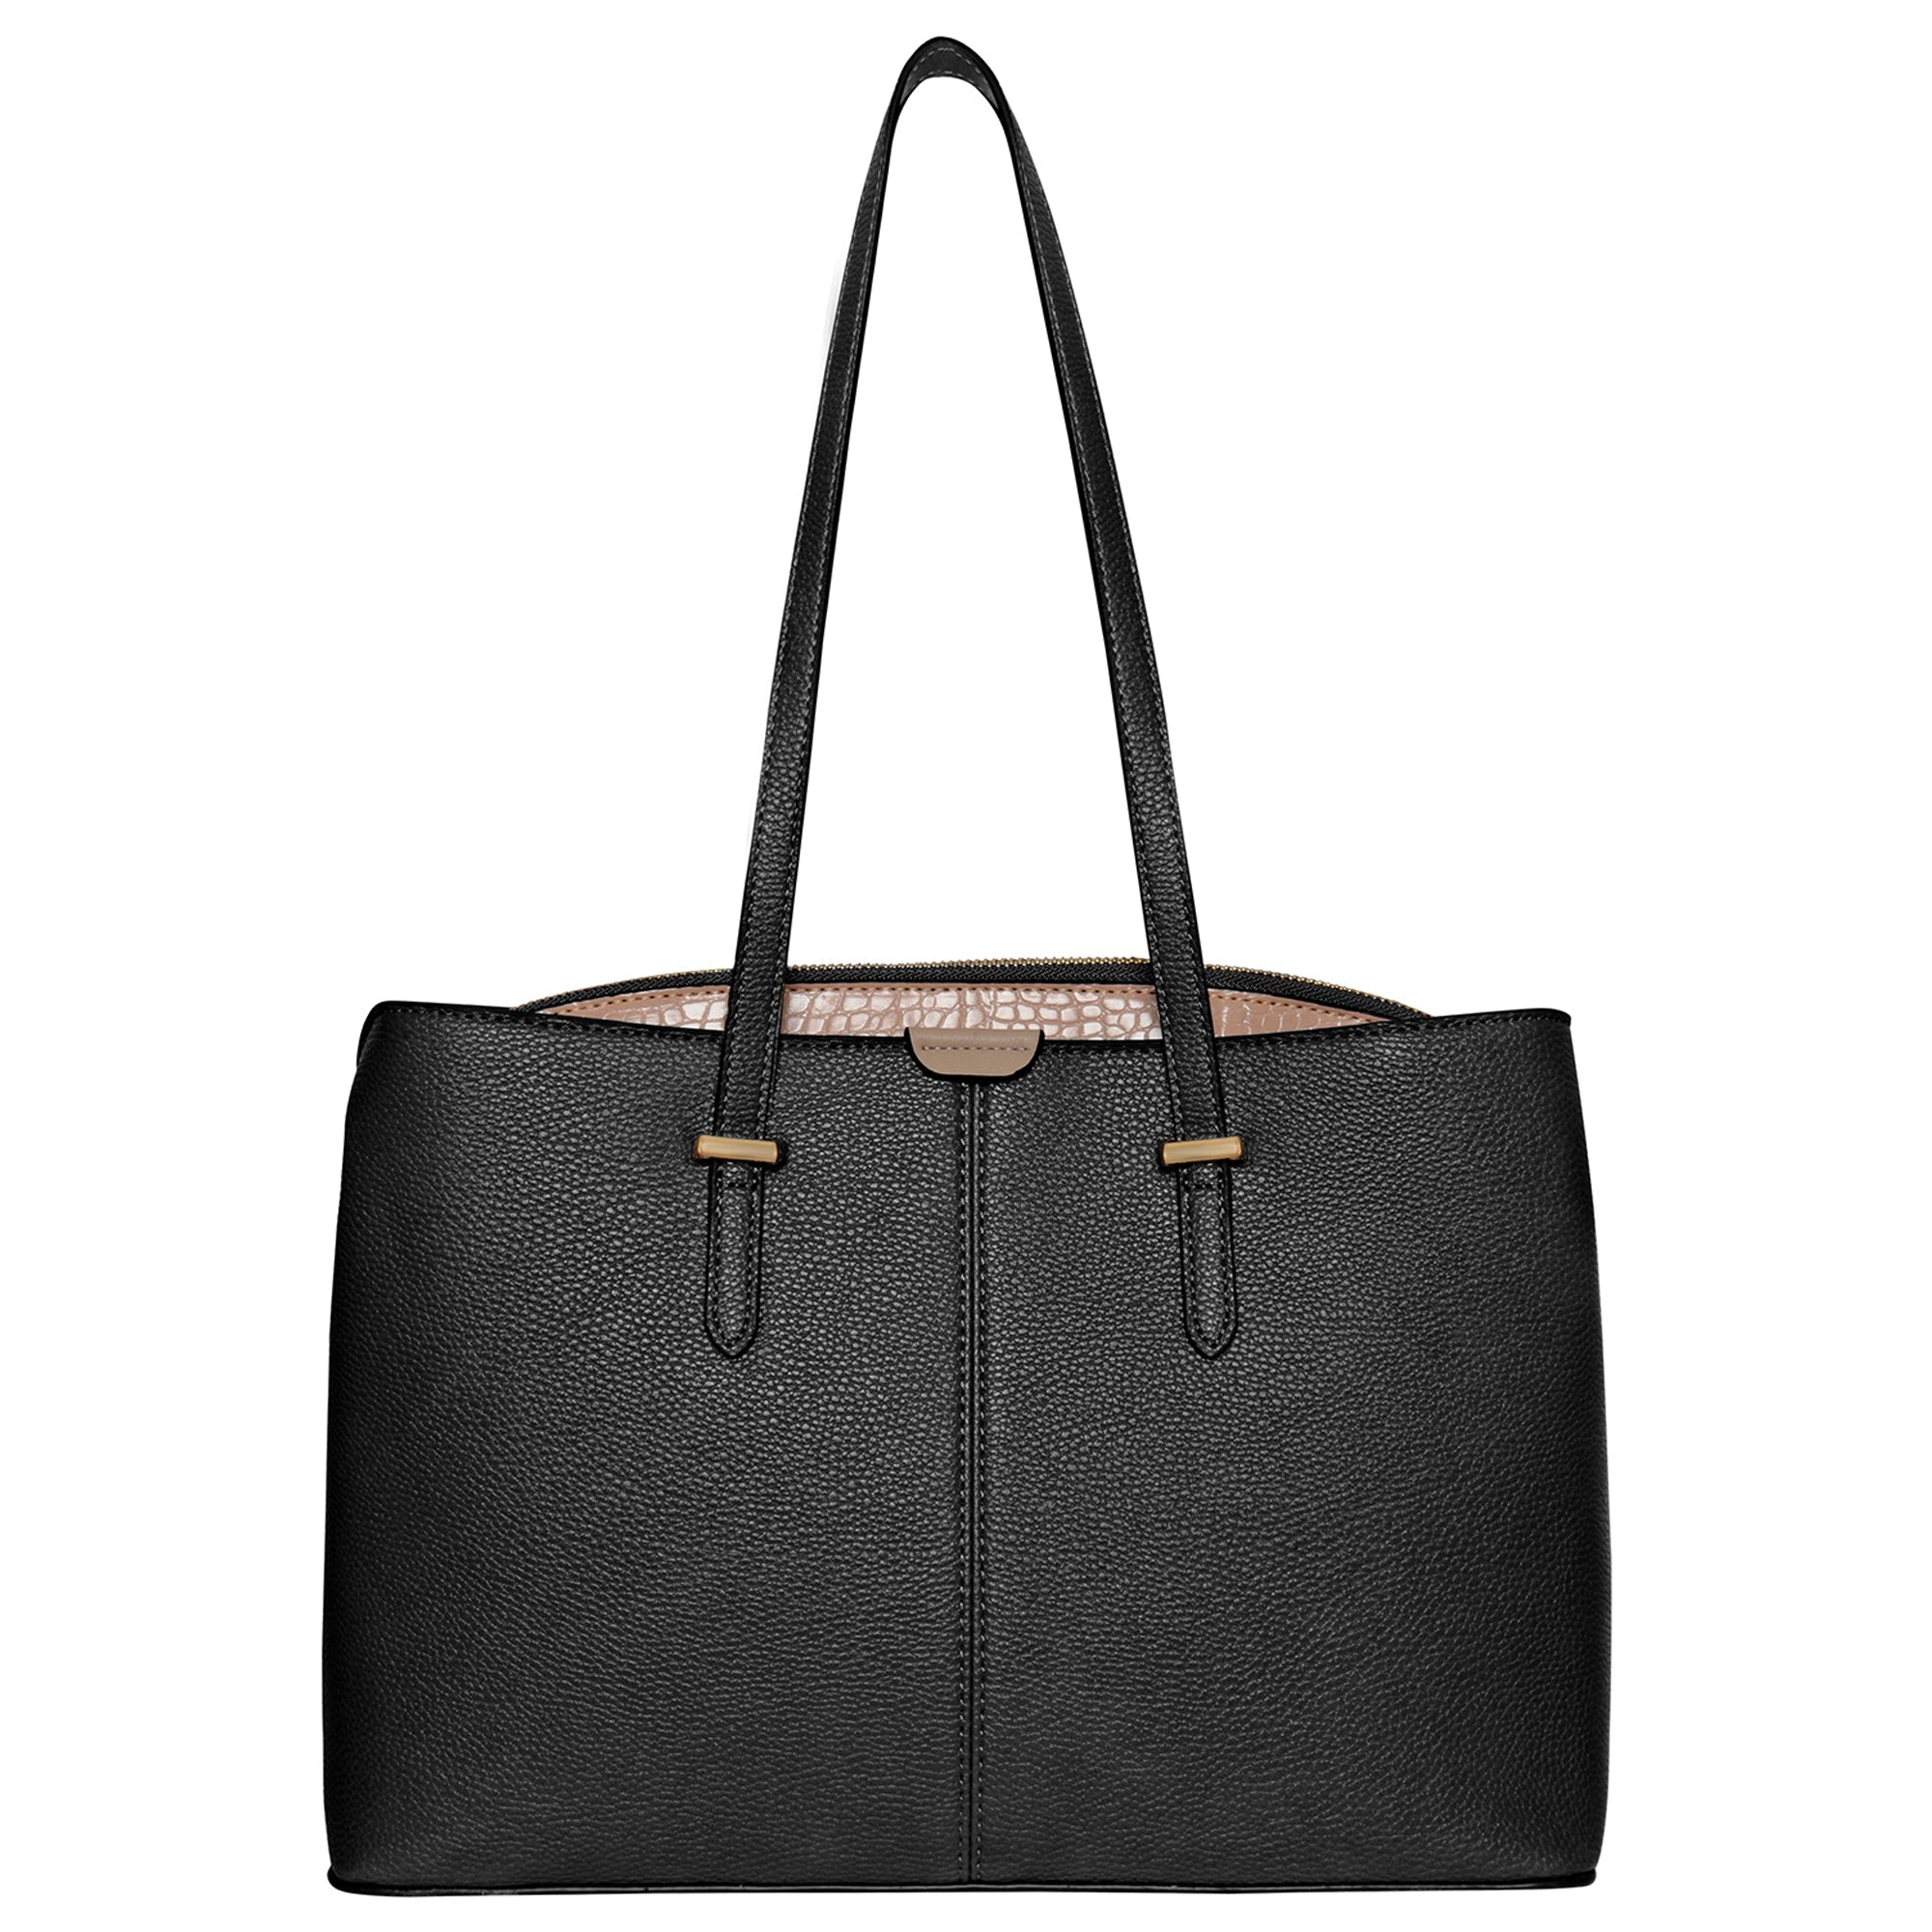 MAISON MOLLERUS London Crossover Bag | Buy bags, purses & accessories  online | modeherz